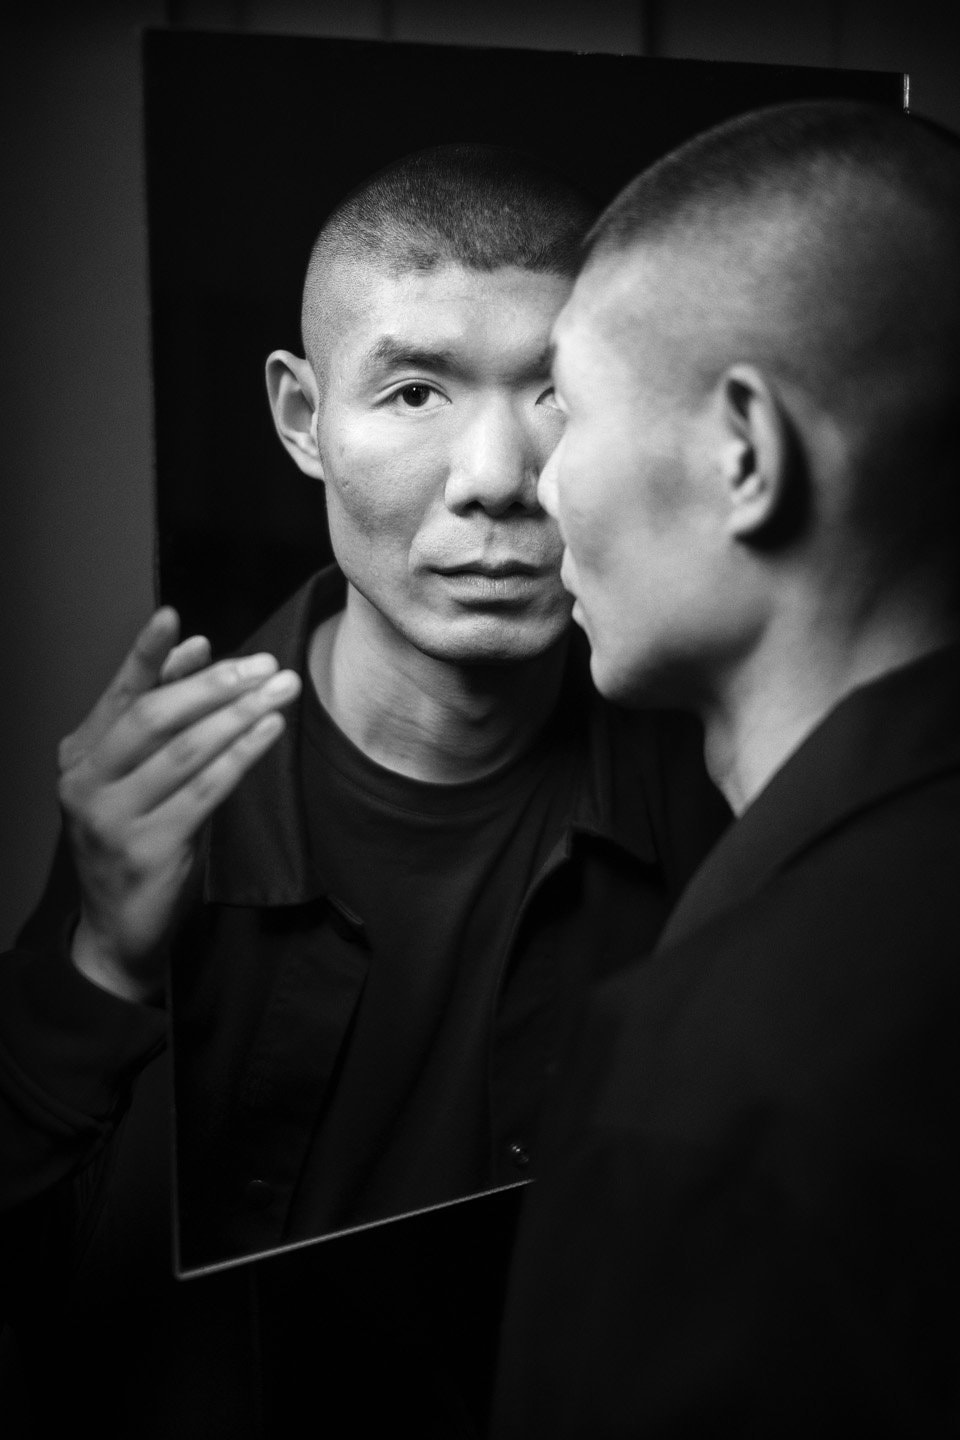 Ren Hang Shanghai Photofairs Spotlight Chinese Photographer Last Authenticated Works Art Photos Photography